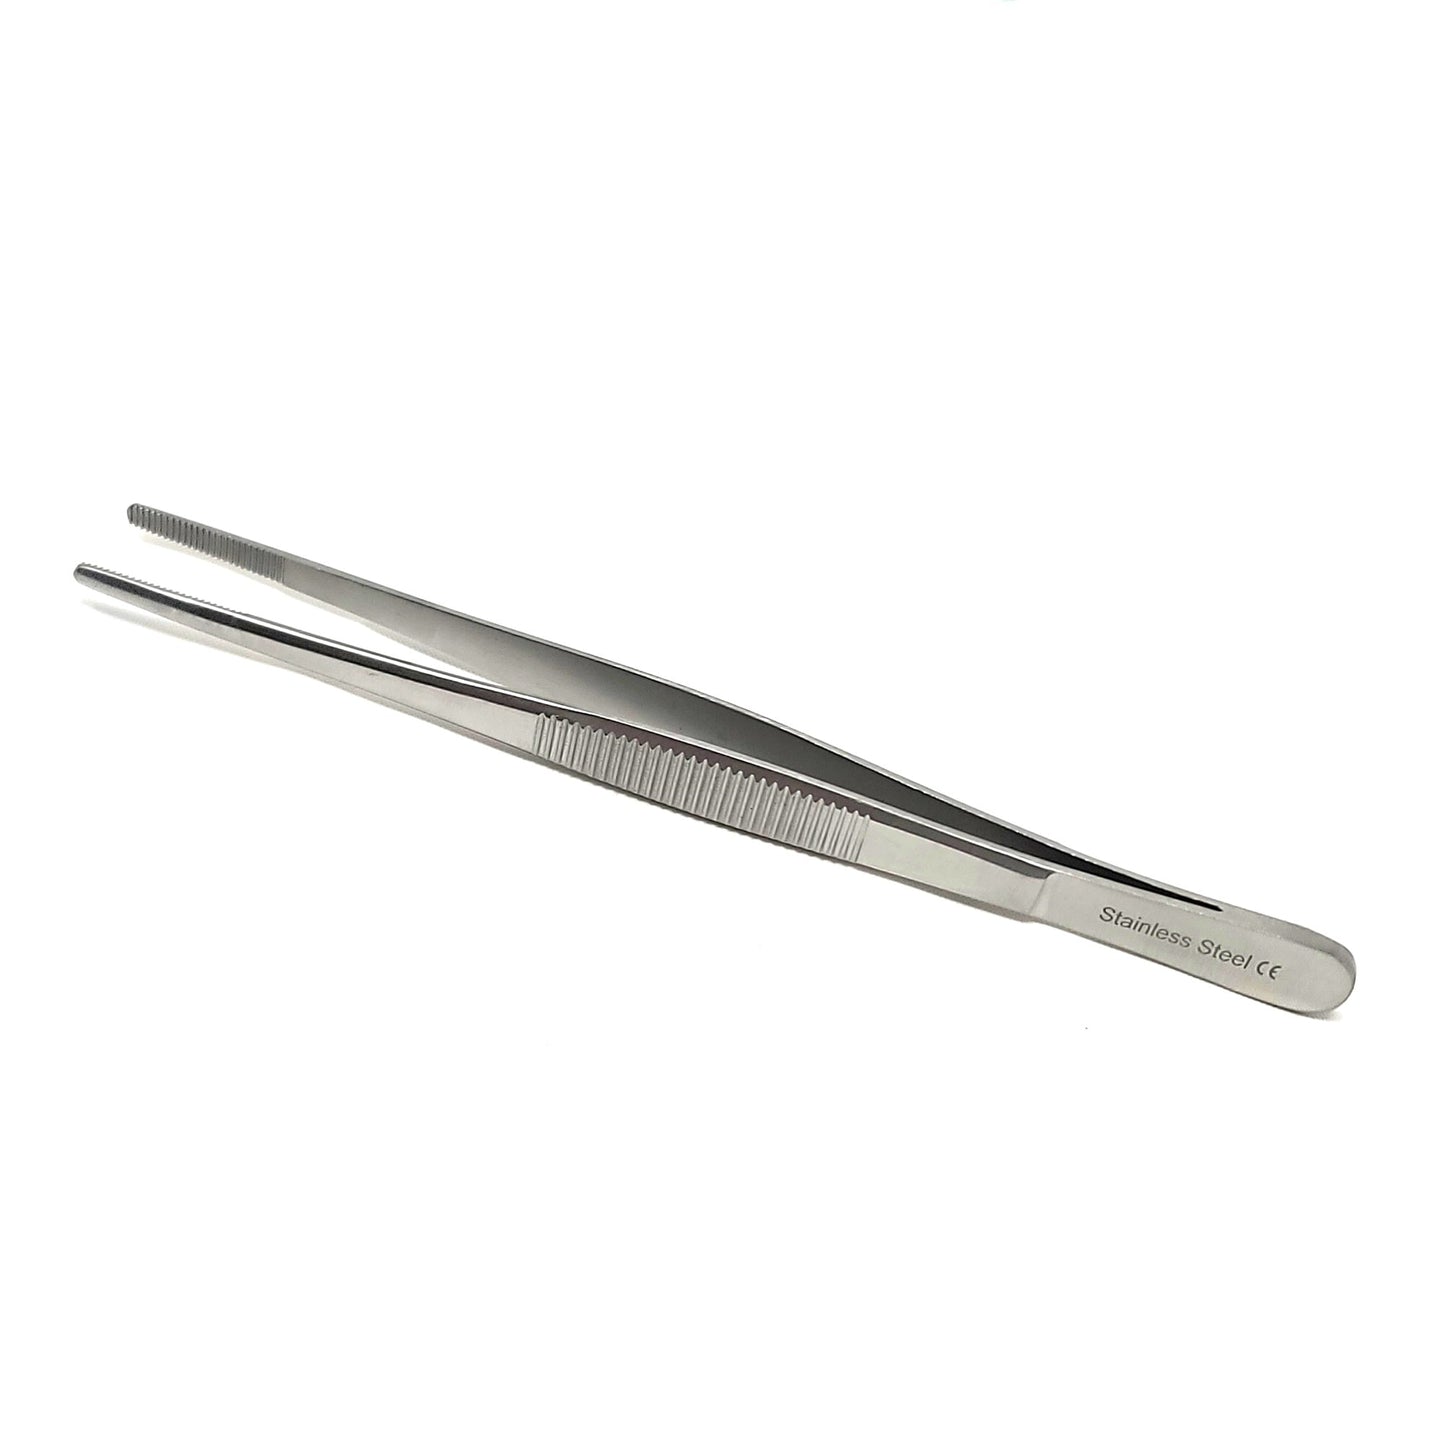 Dissecting Thumb Forceps Tweezers 5" (12.7 cm), Blunt Serrated Tips